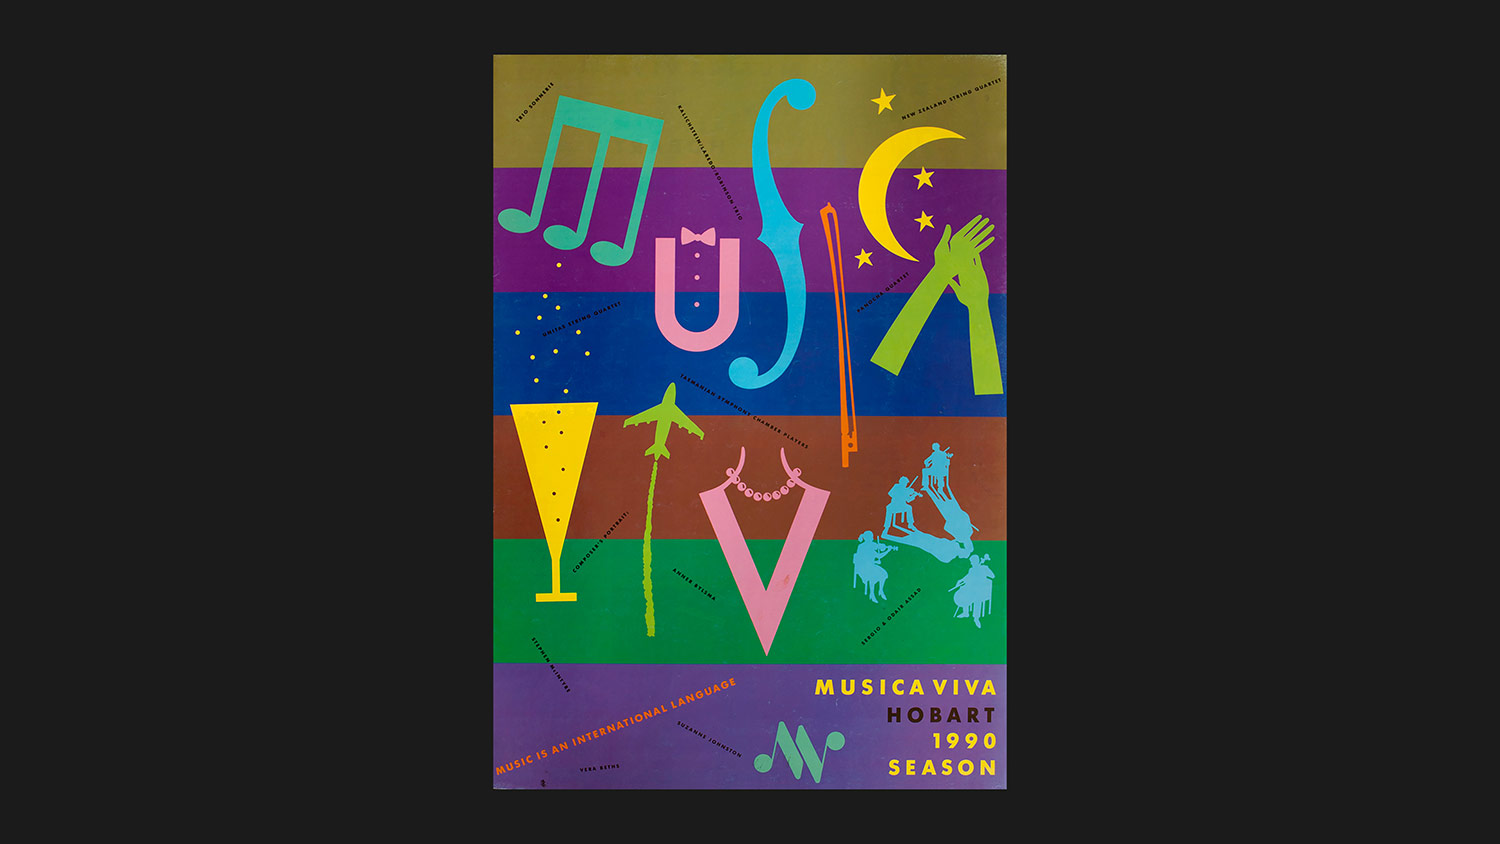 Musica Viva Season Campaign, 1990